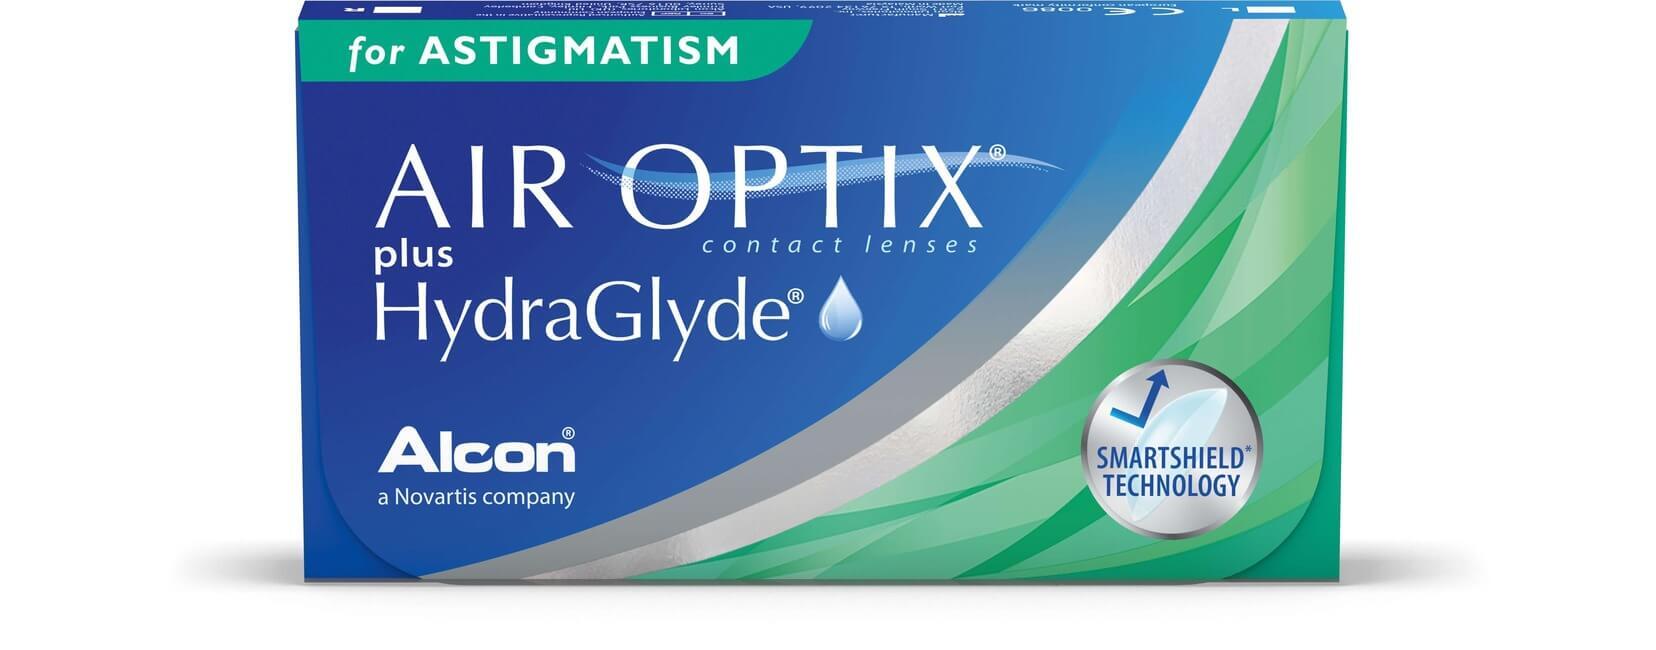 Air optix for astigmatism coupon